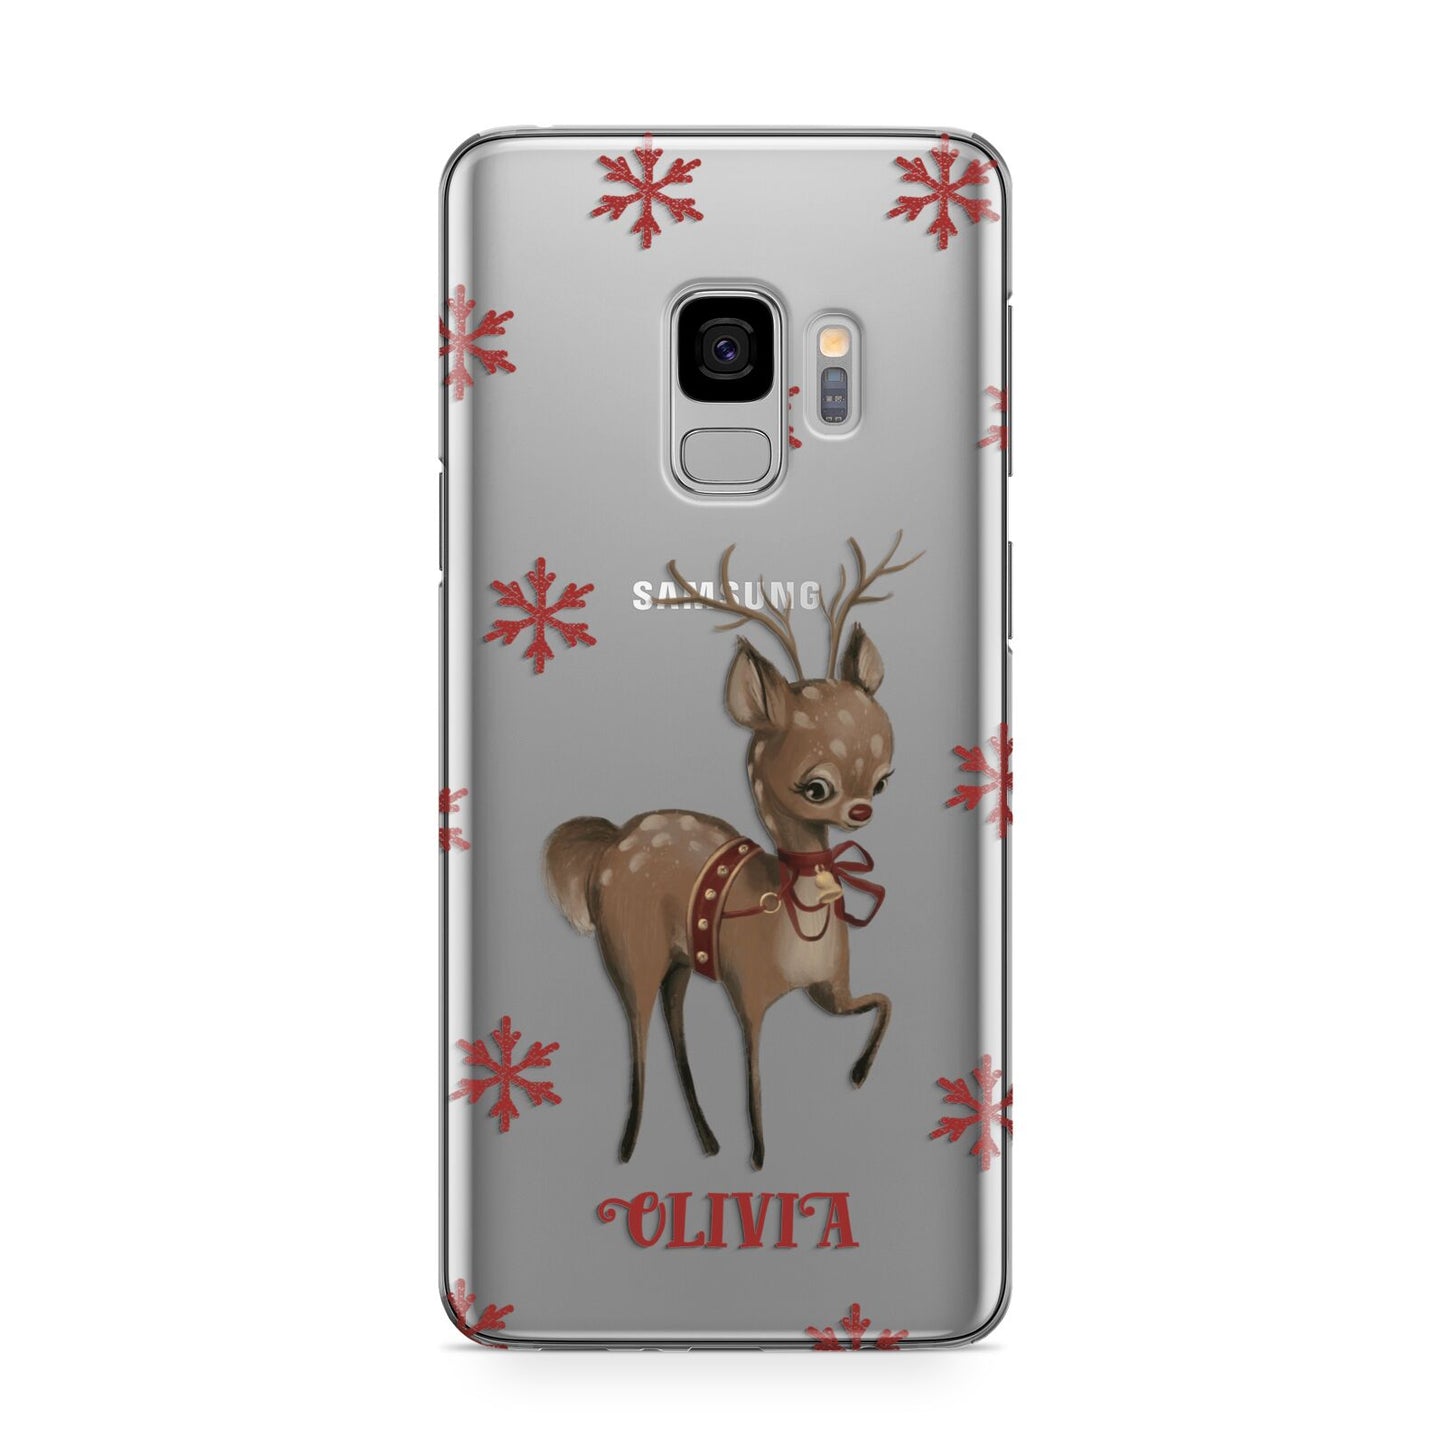 Rudolph Delivery Samsung Galaxy S9 Case